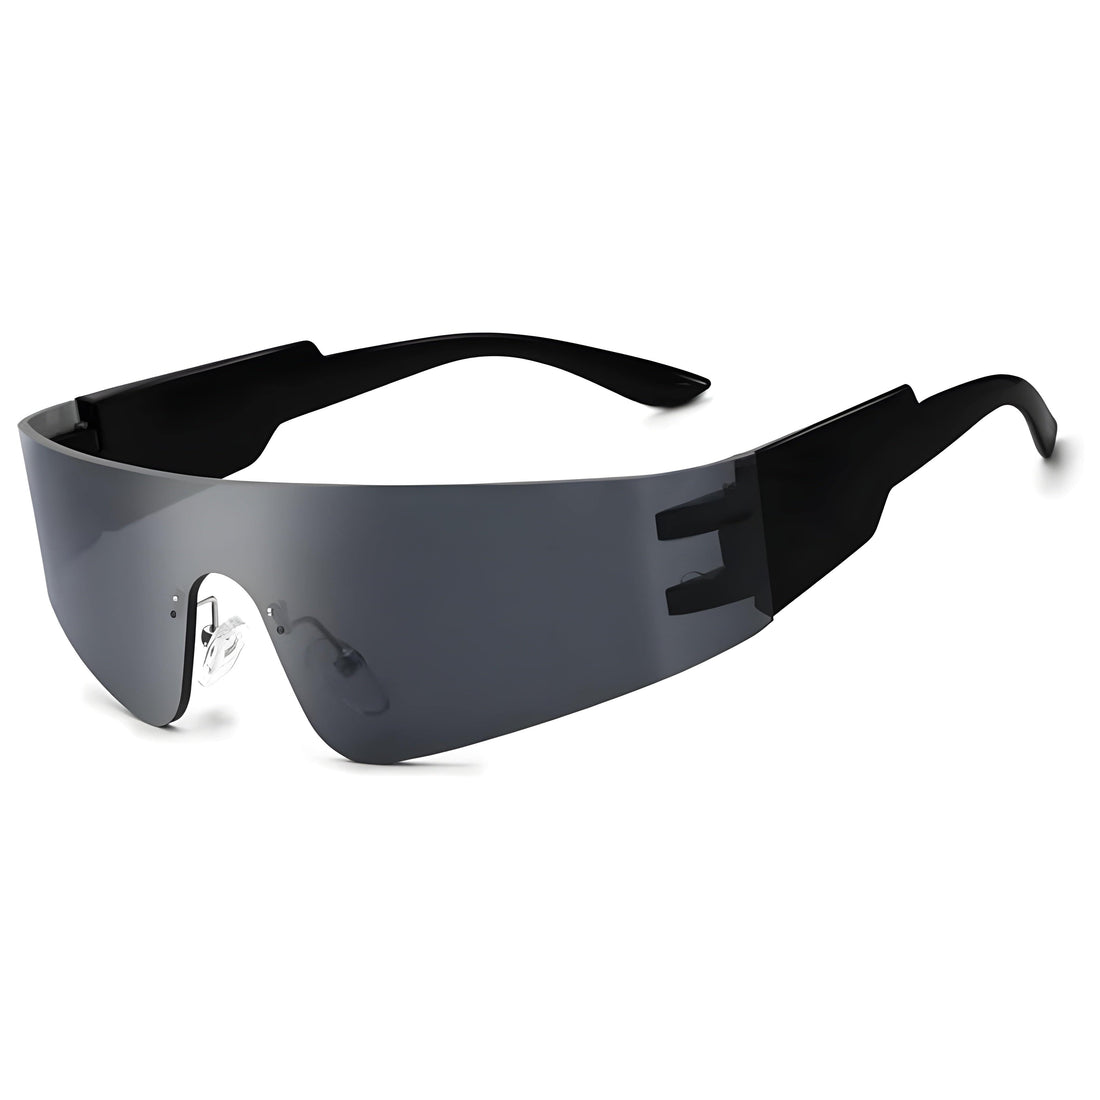 Rave Essentials Co. Midnight Black Futuristic Full Send Raver Sunglasses